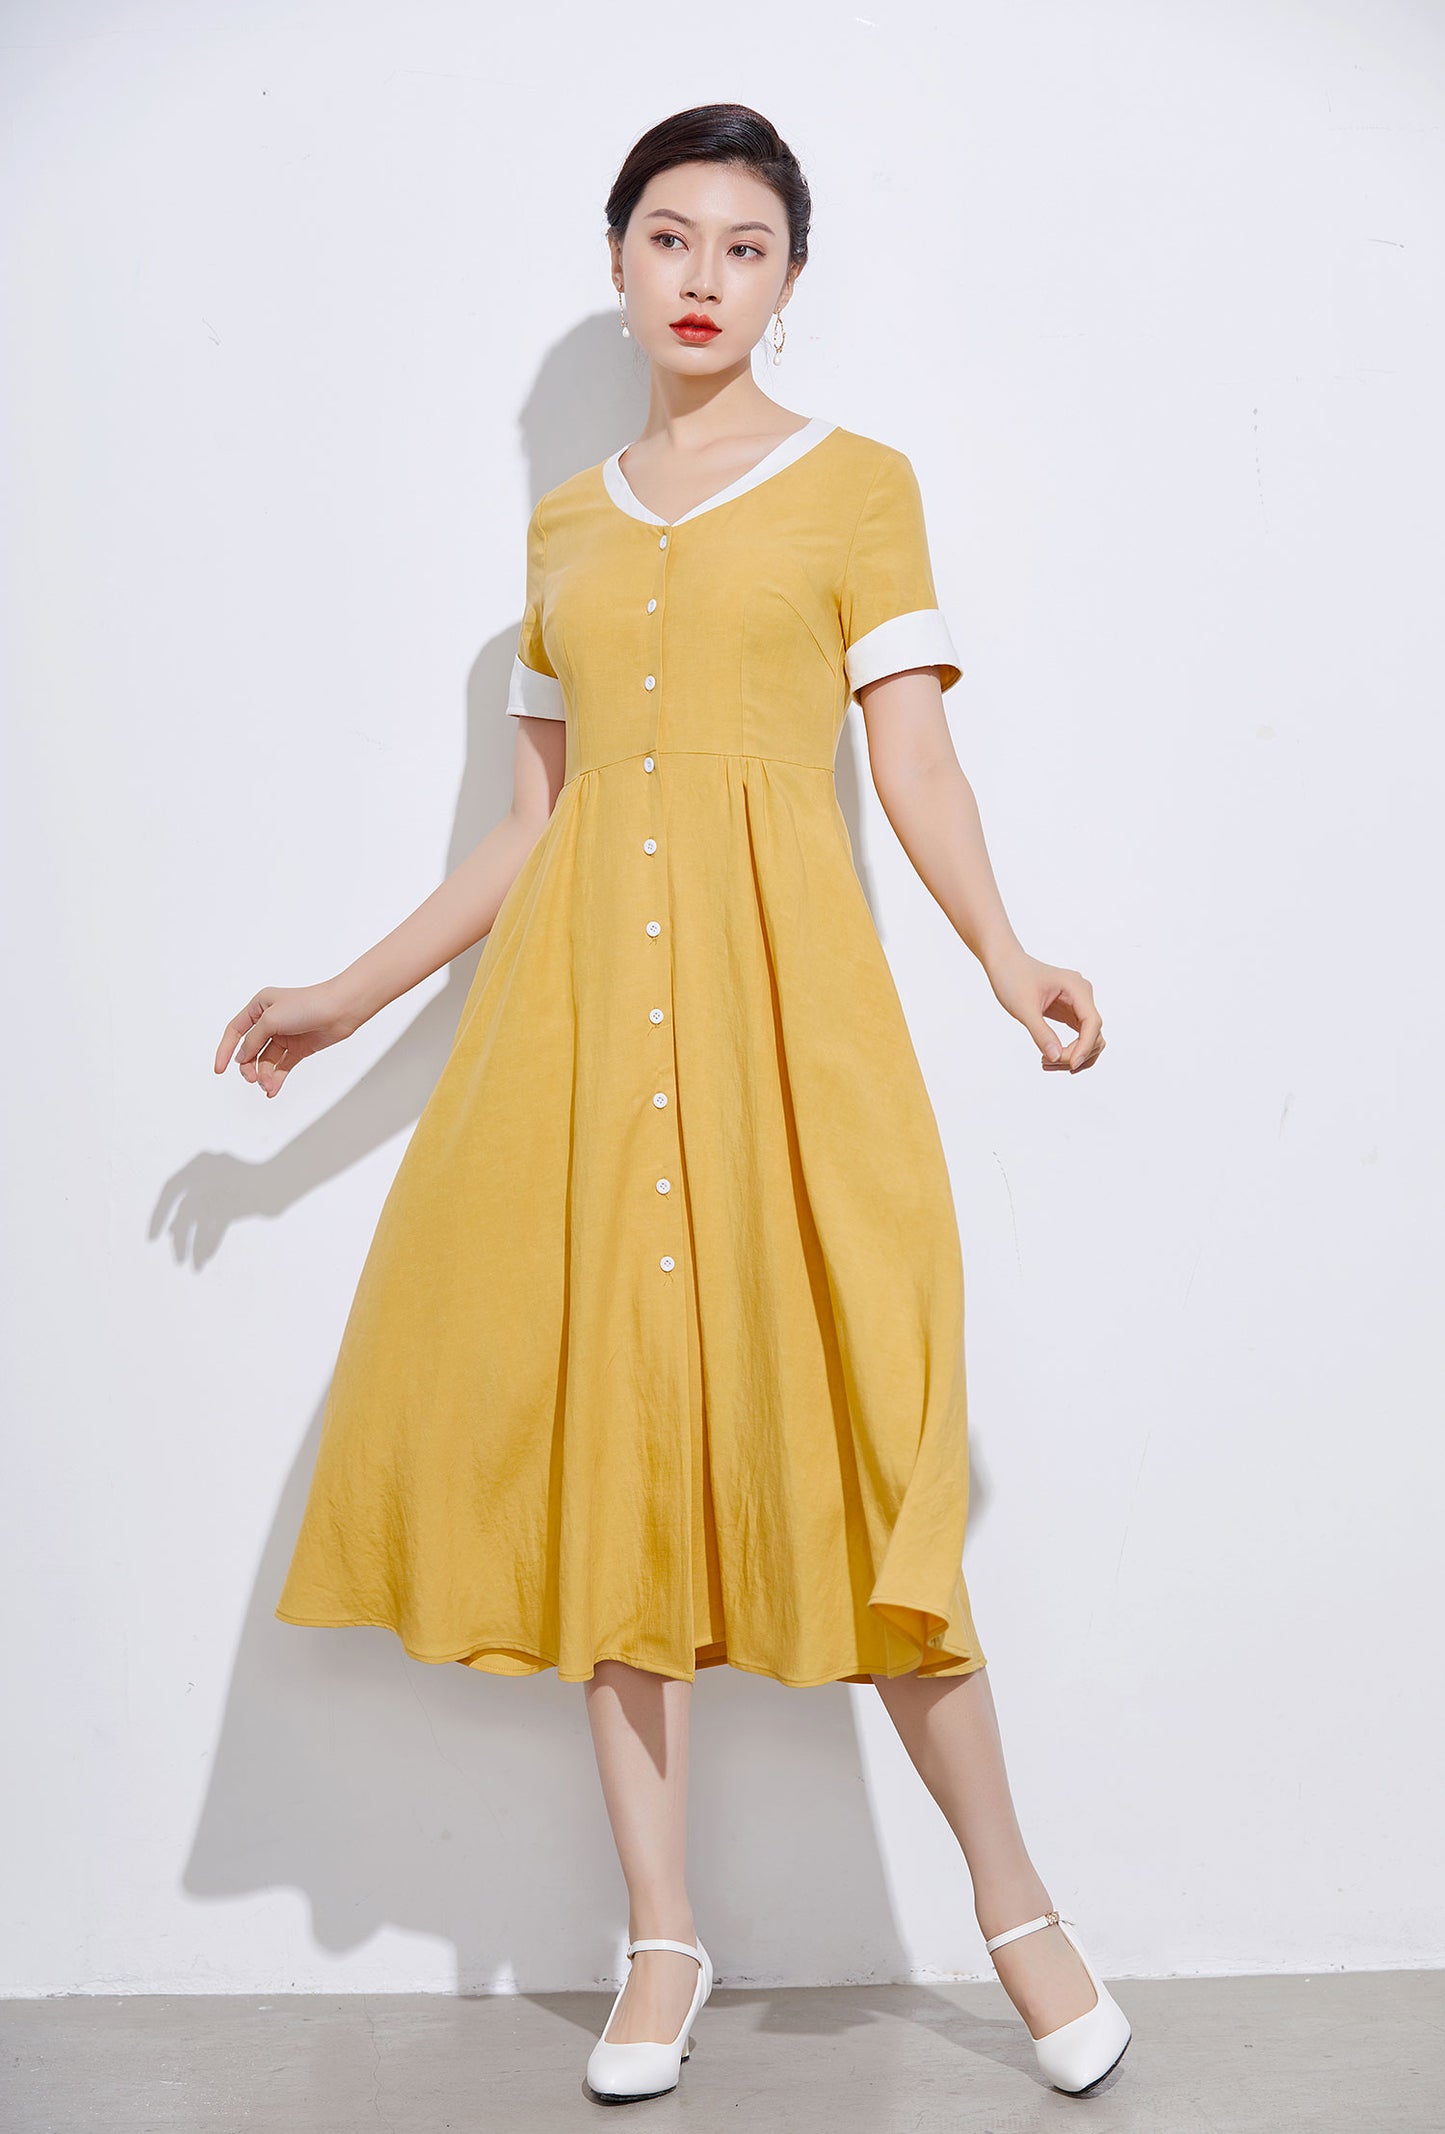 vintage inspired Yellow linen shirt dress 2317#